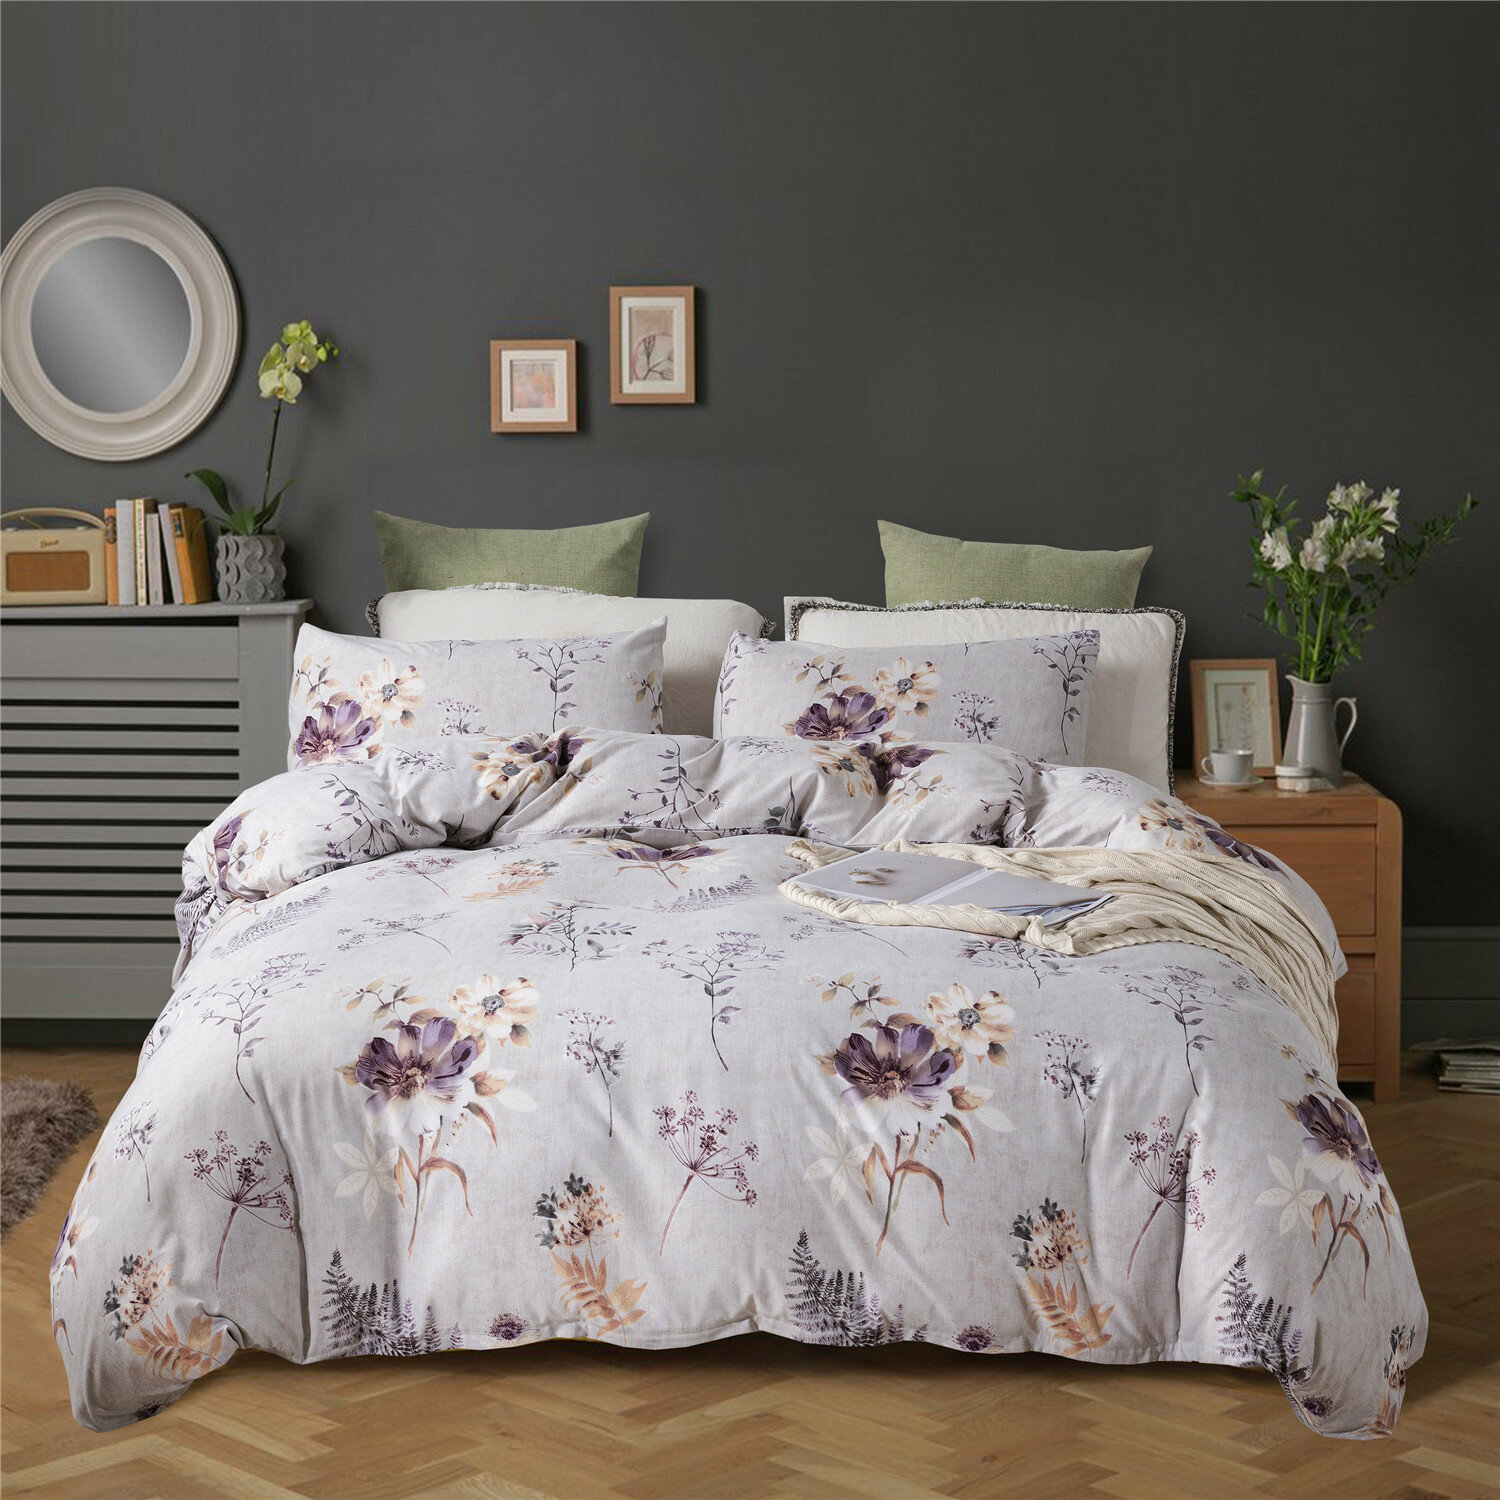 

2/3pcs Bedding Set Printed Flowers Comforter Quilt Cover Pillowsilp Cotton Warm Soft Duvet Cover for Home Textile